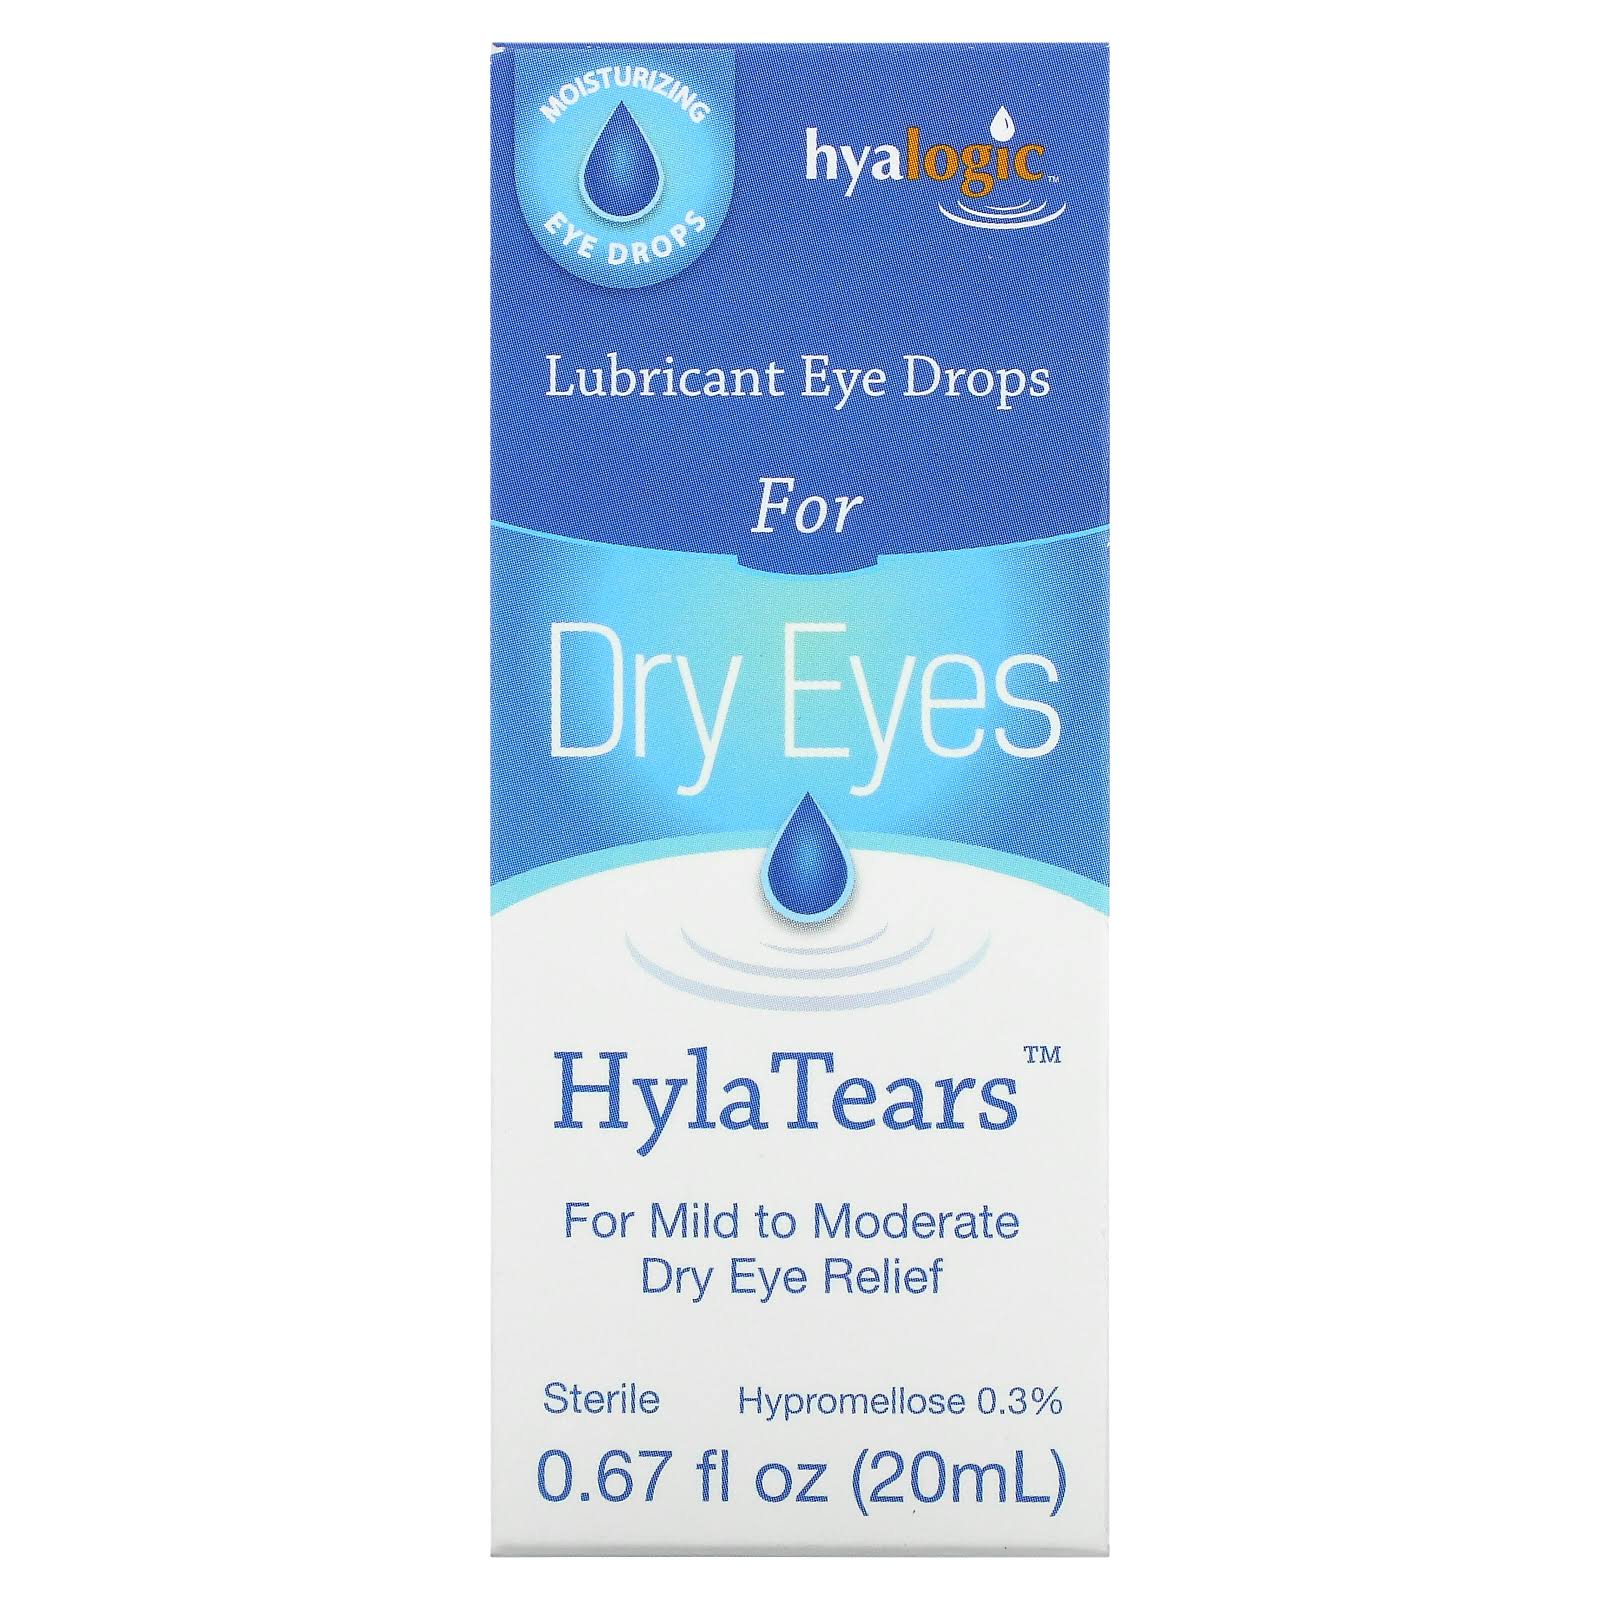 Hyalogic HylaTears Lubricant Eye Drops | Hyaluronic Acid Dry Eye Relie